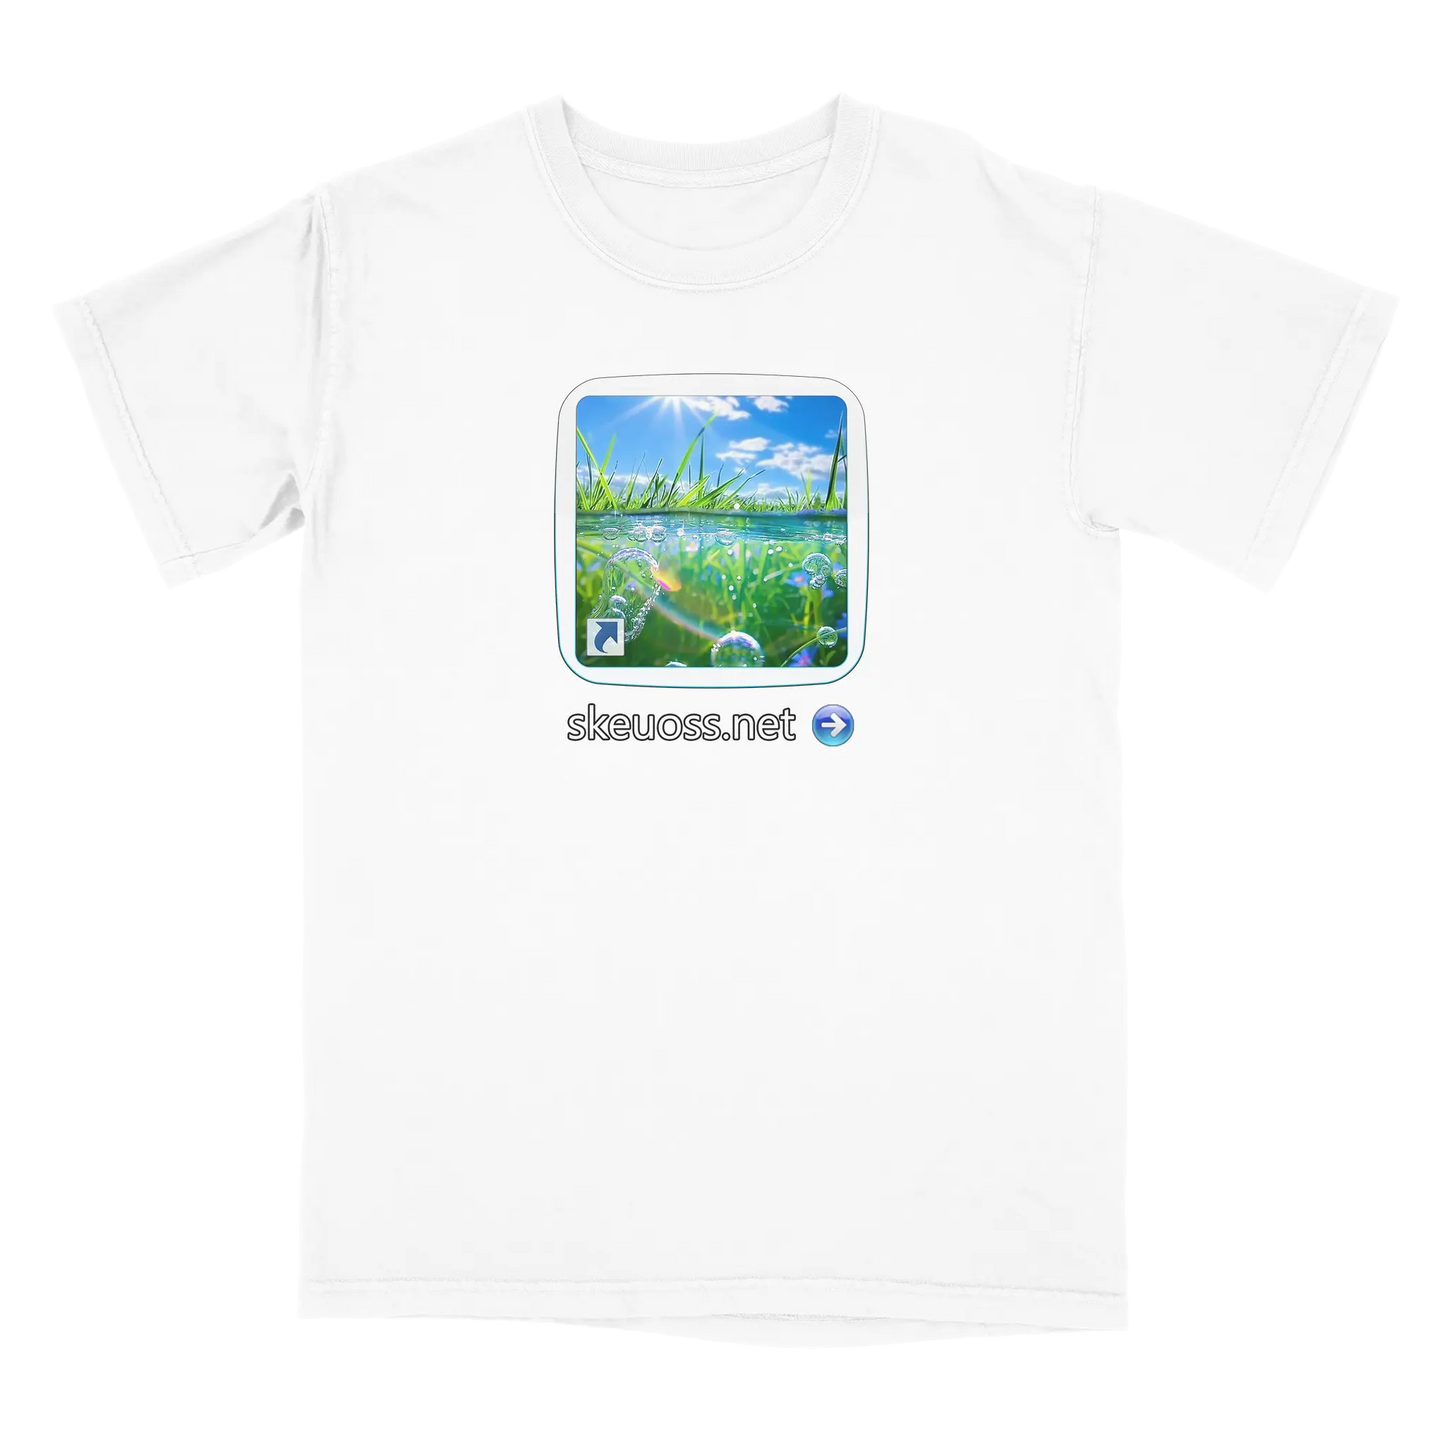 Frutiger Aero T-shirt - User Login Collection - User 253